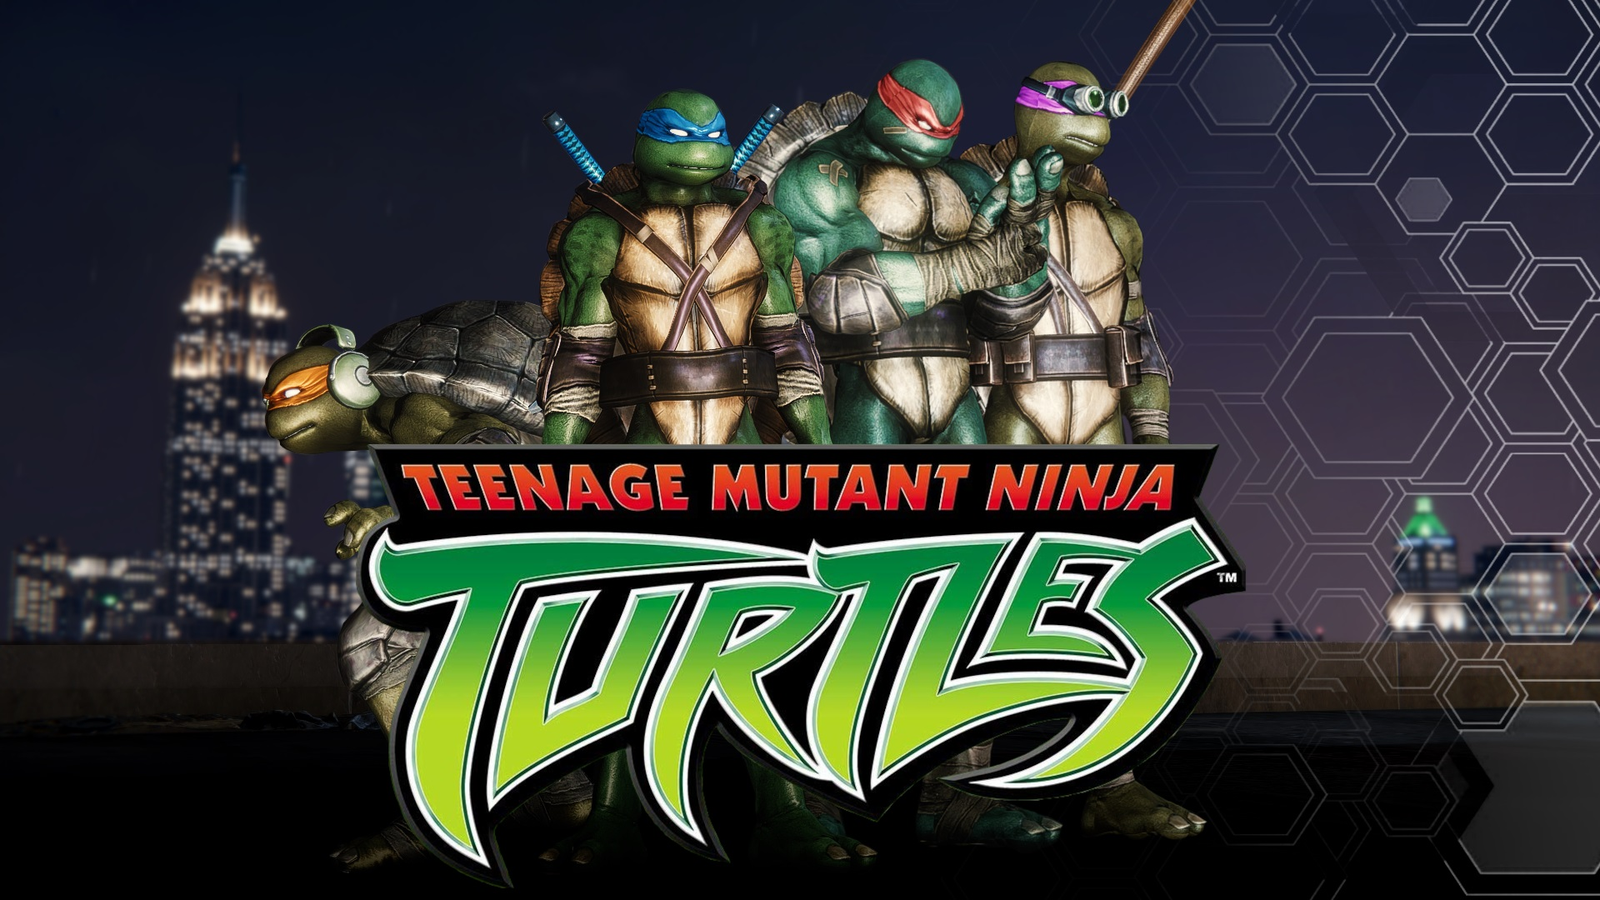 Teenage Mutant Ninja Turtles get Spider-Verse makeover in Mutant